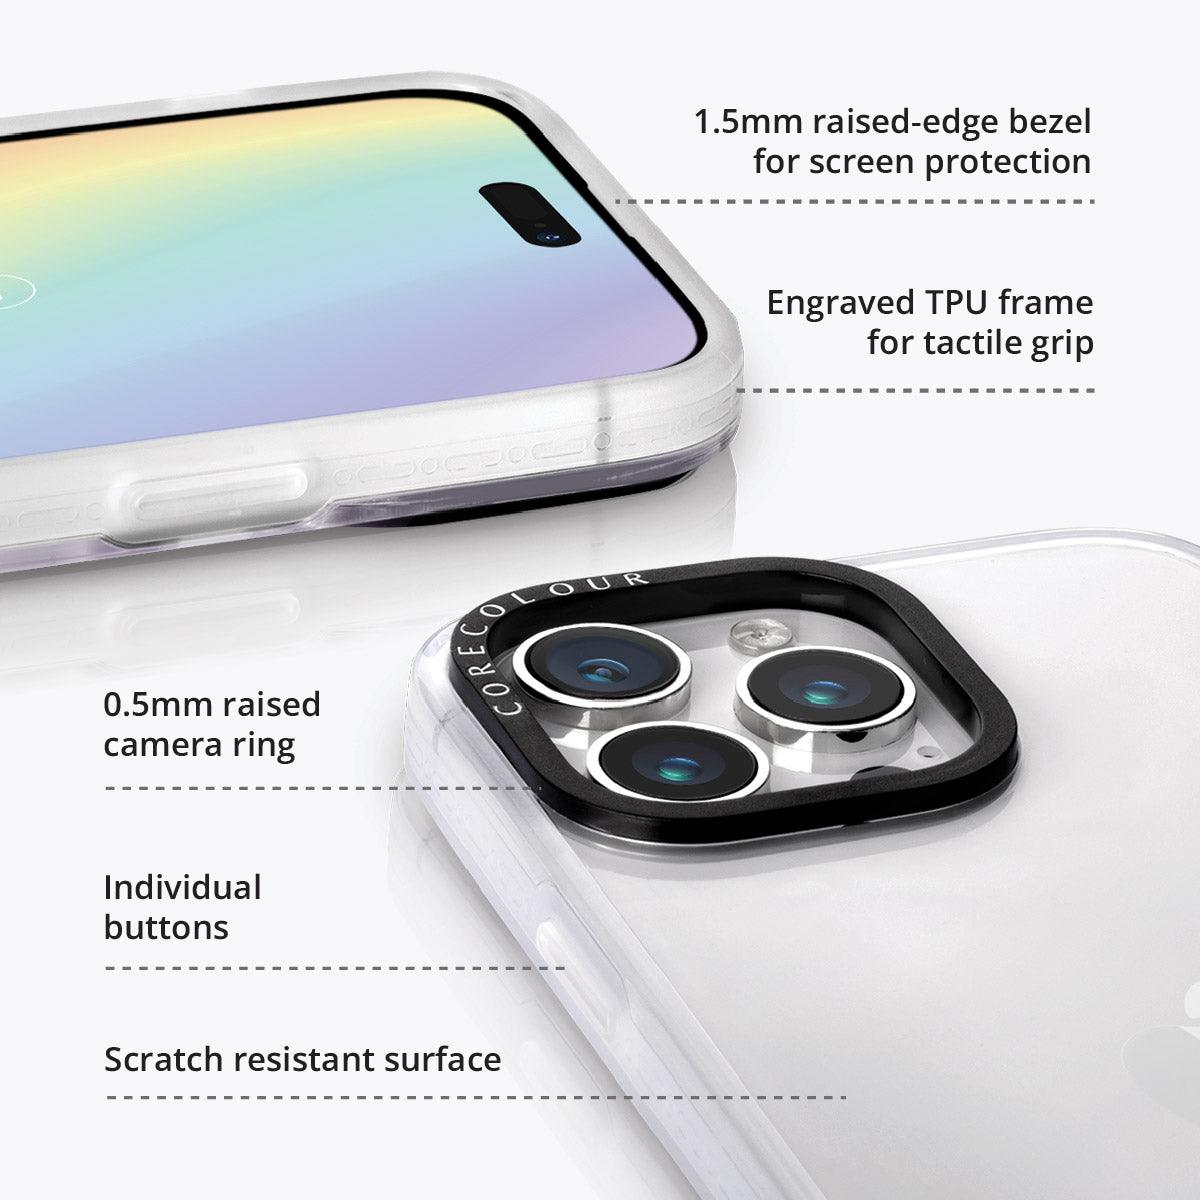 iPhone 13 Pro Max Mosaic Confetti Phone Case 